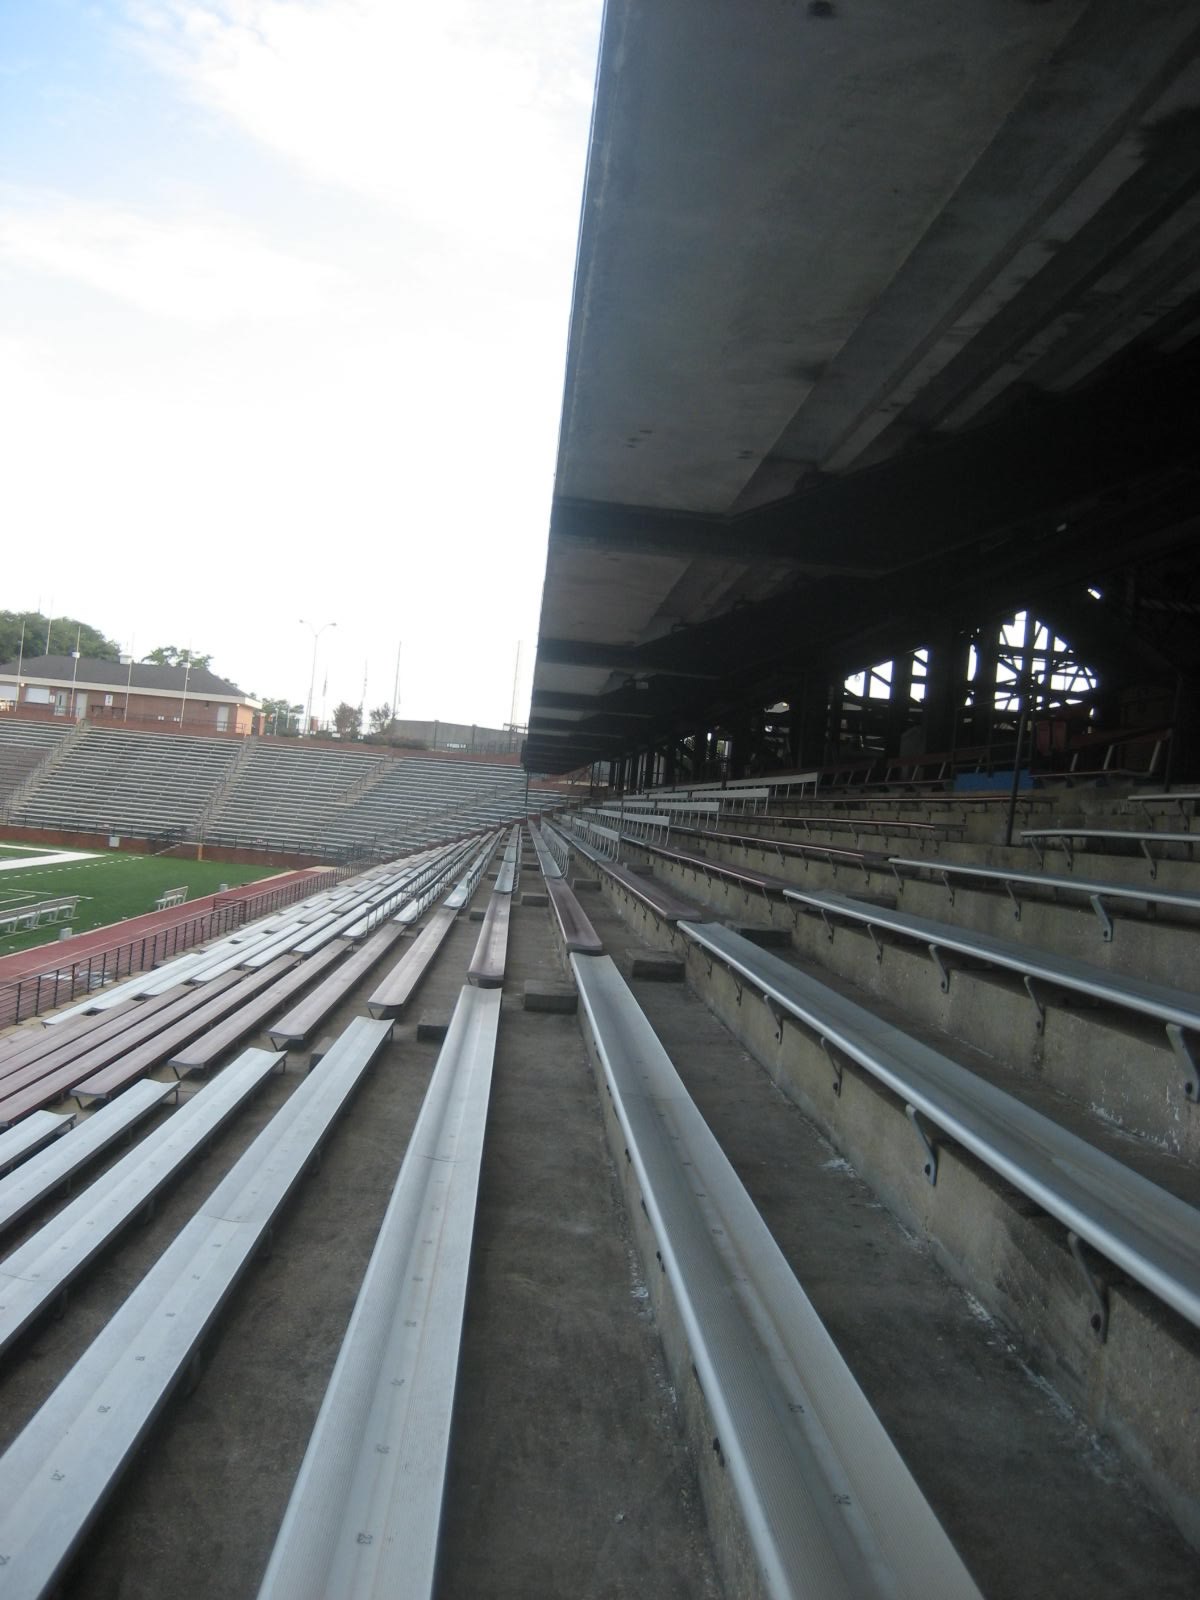 Troy Football Stadium Seating Chart